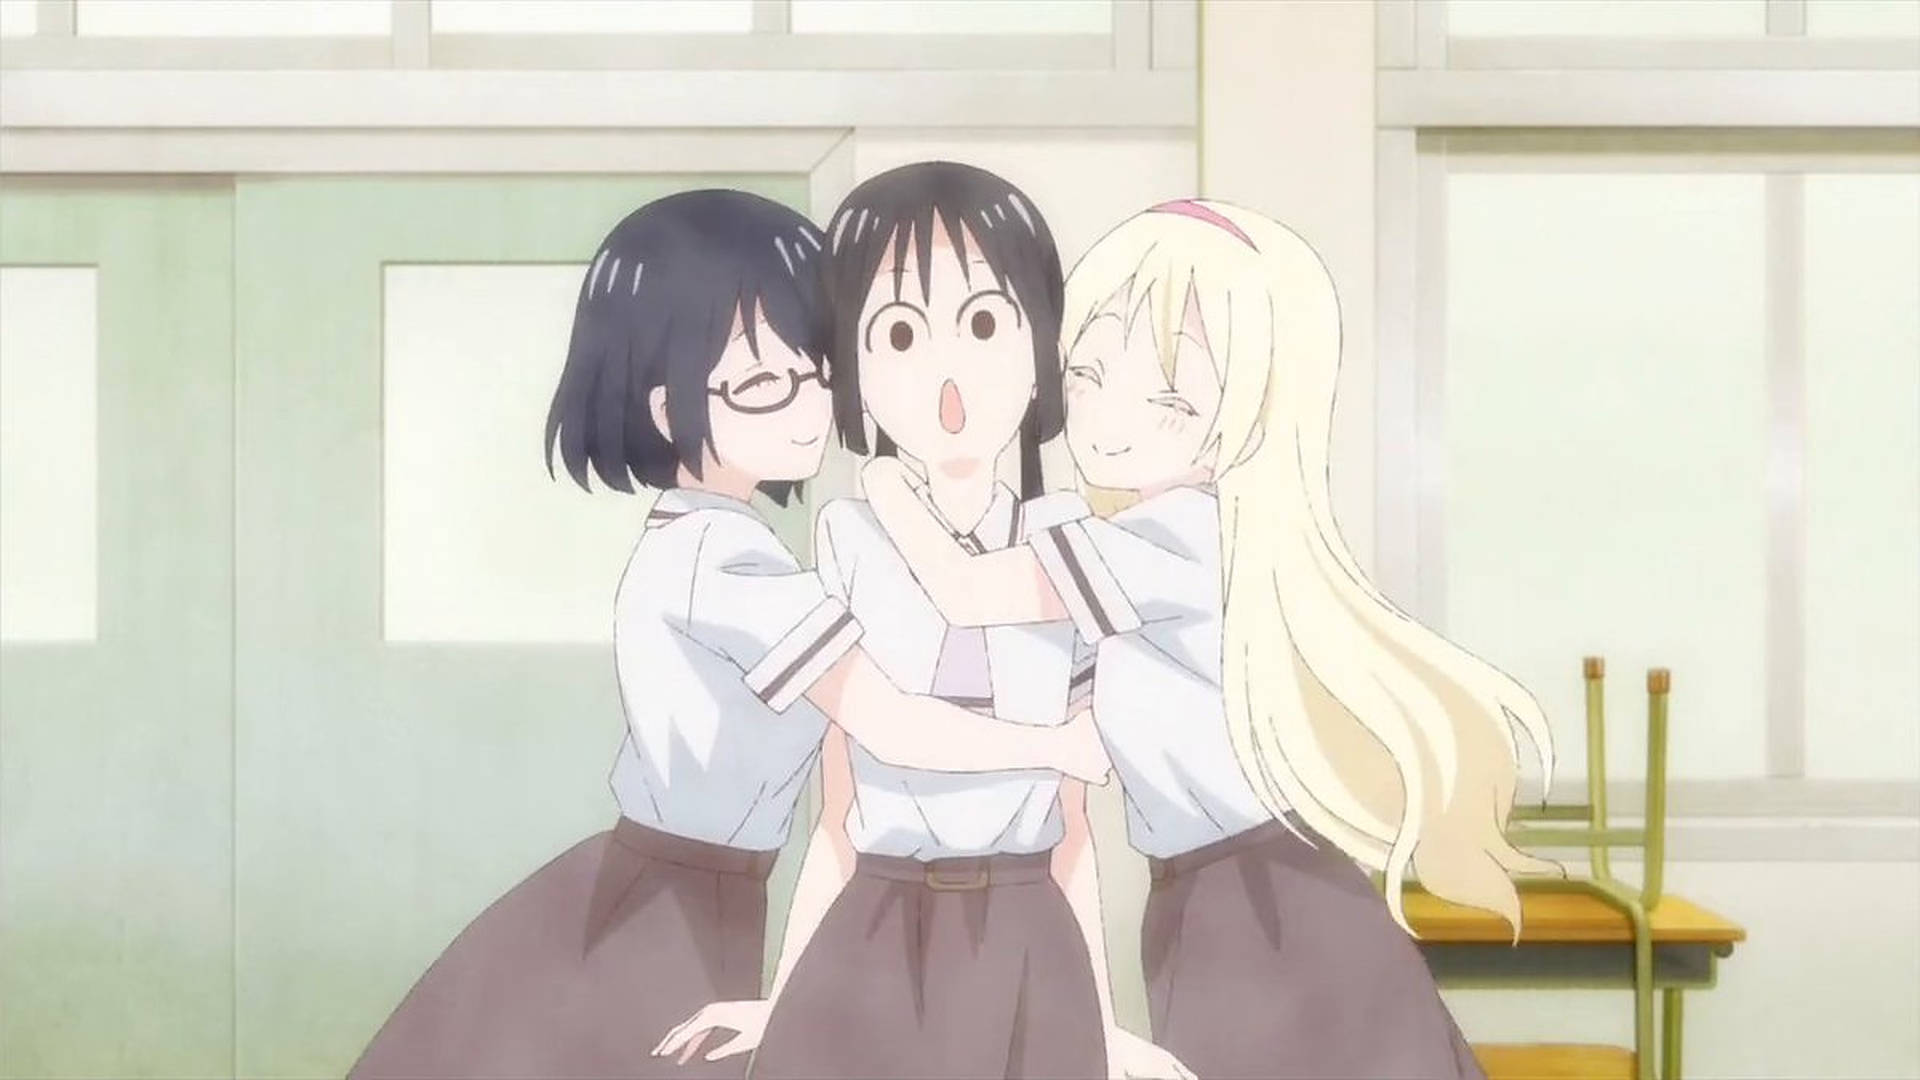 Light-hearted Classroom Scene From Asobi Asobase Anime